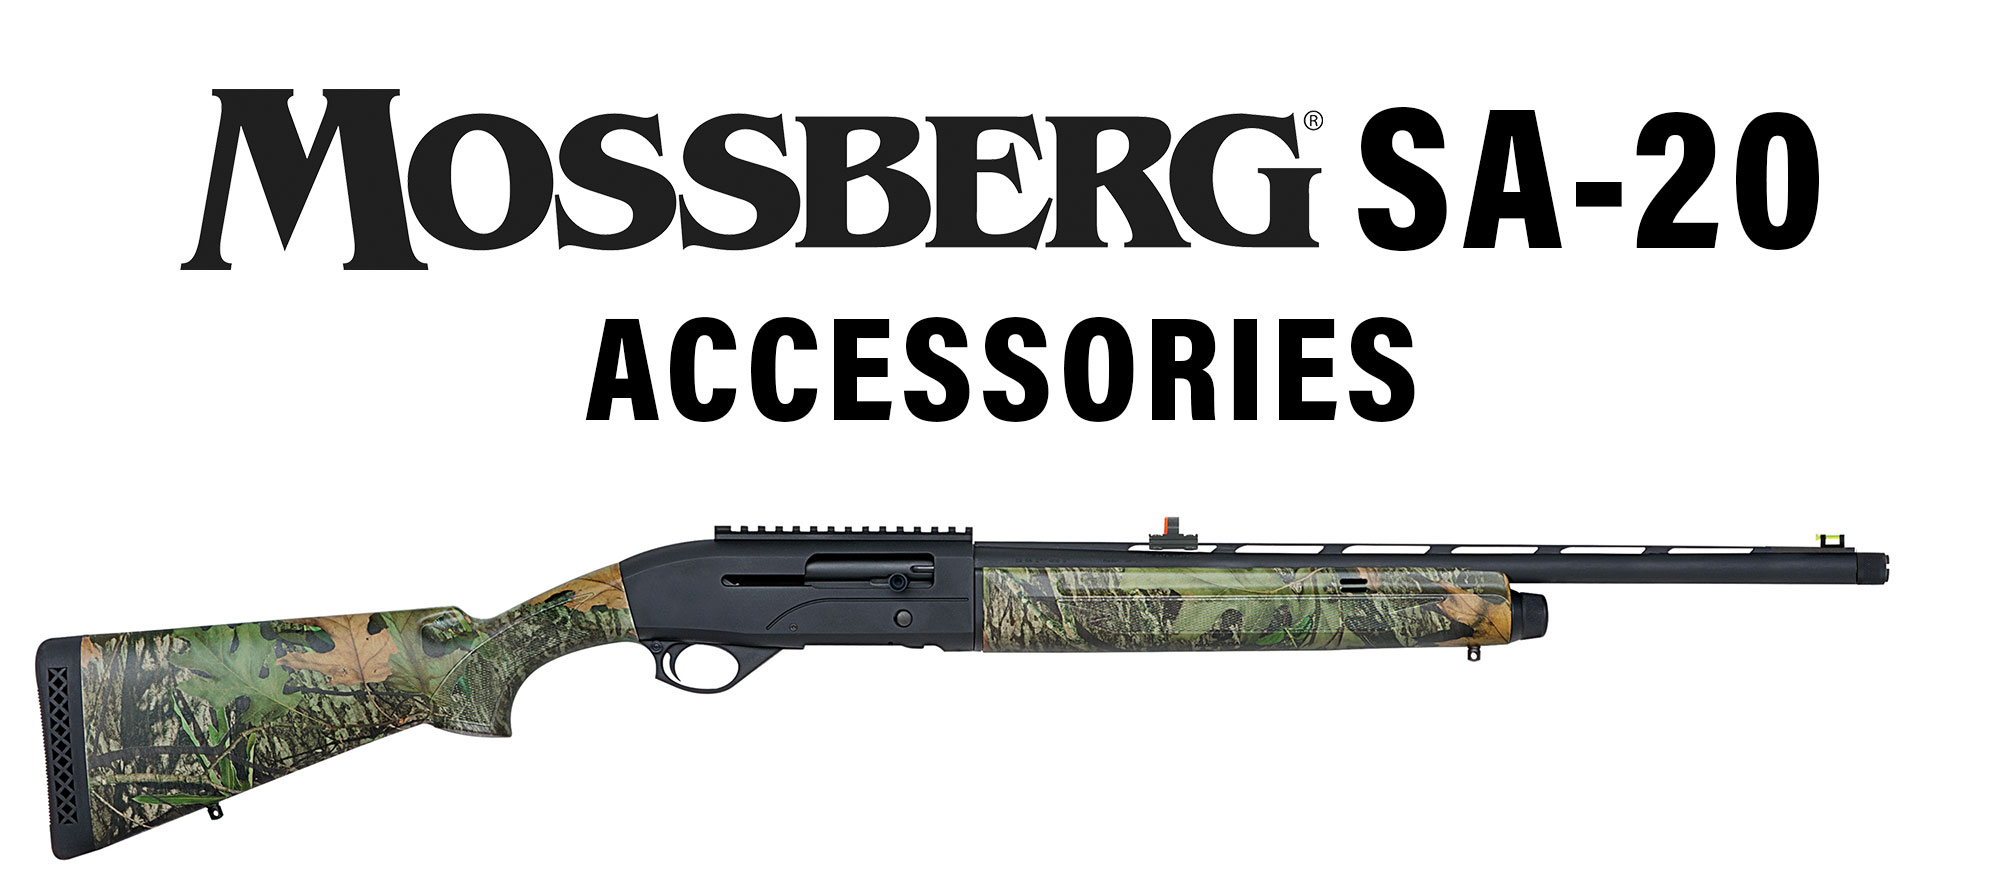 Mossberg SA-20 Accessories